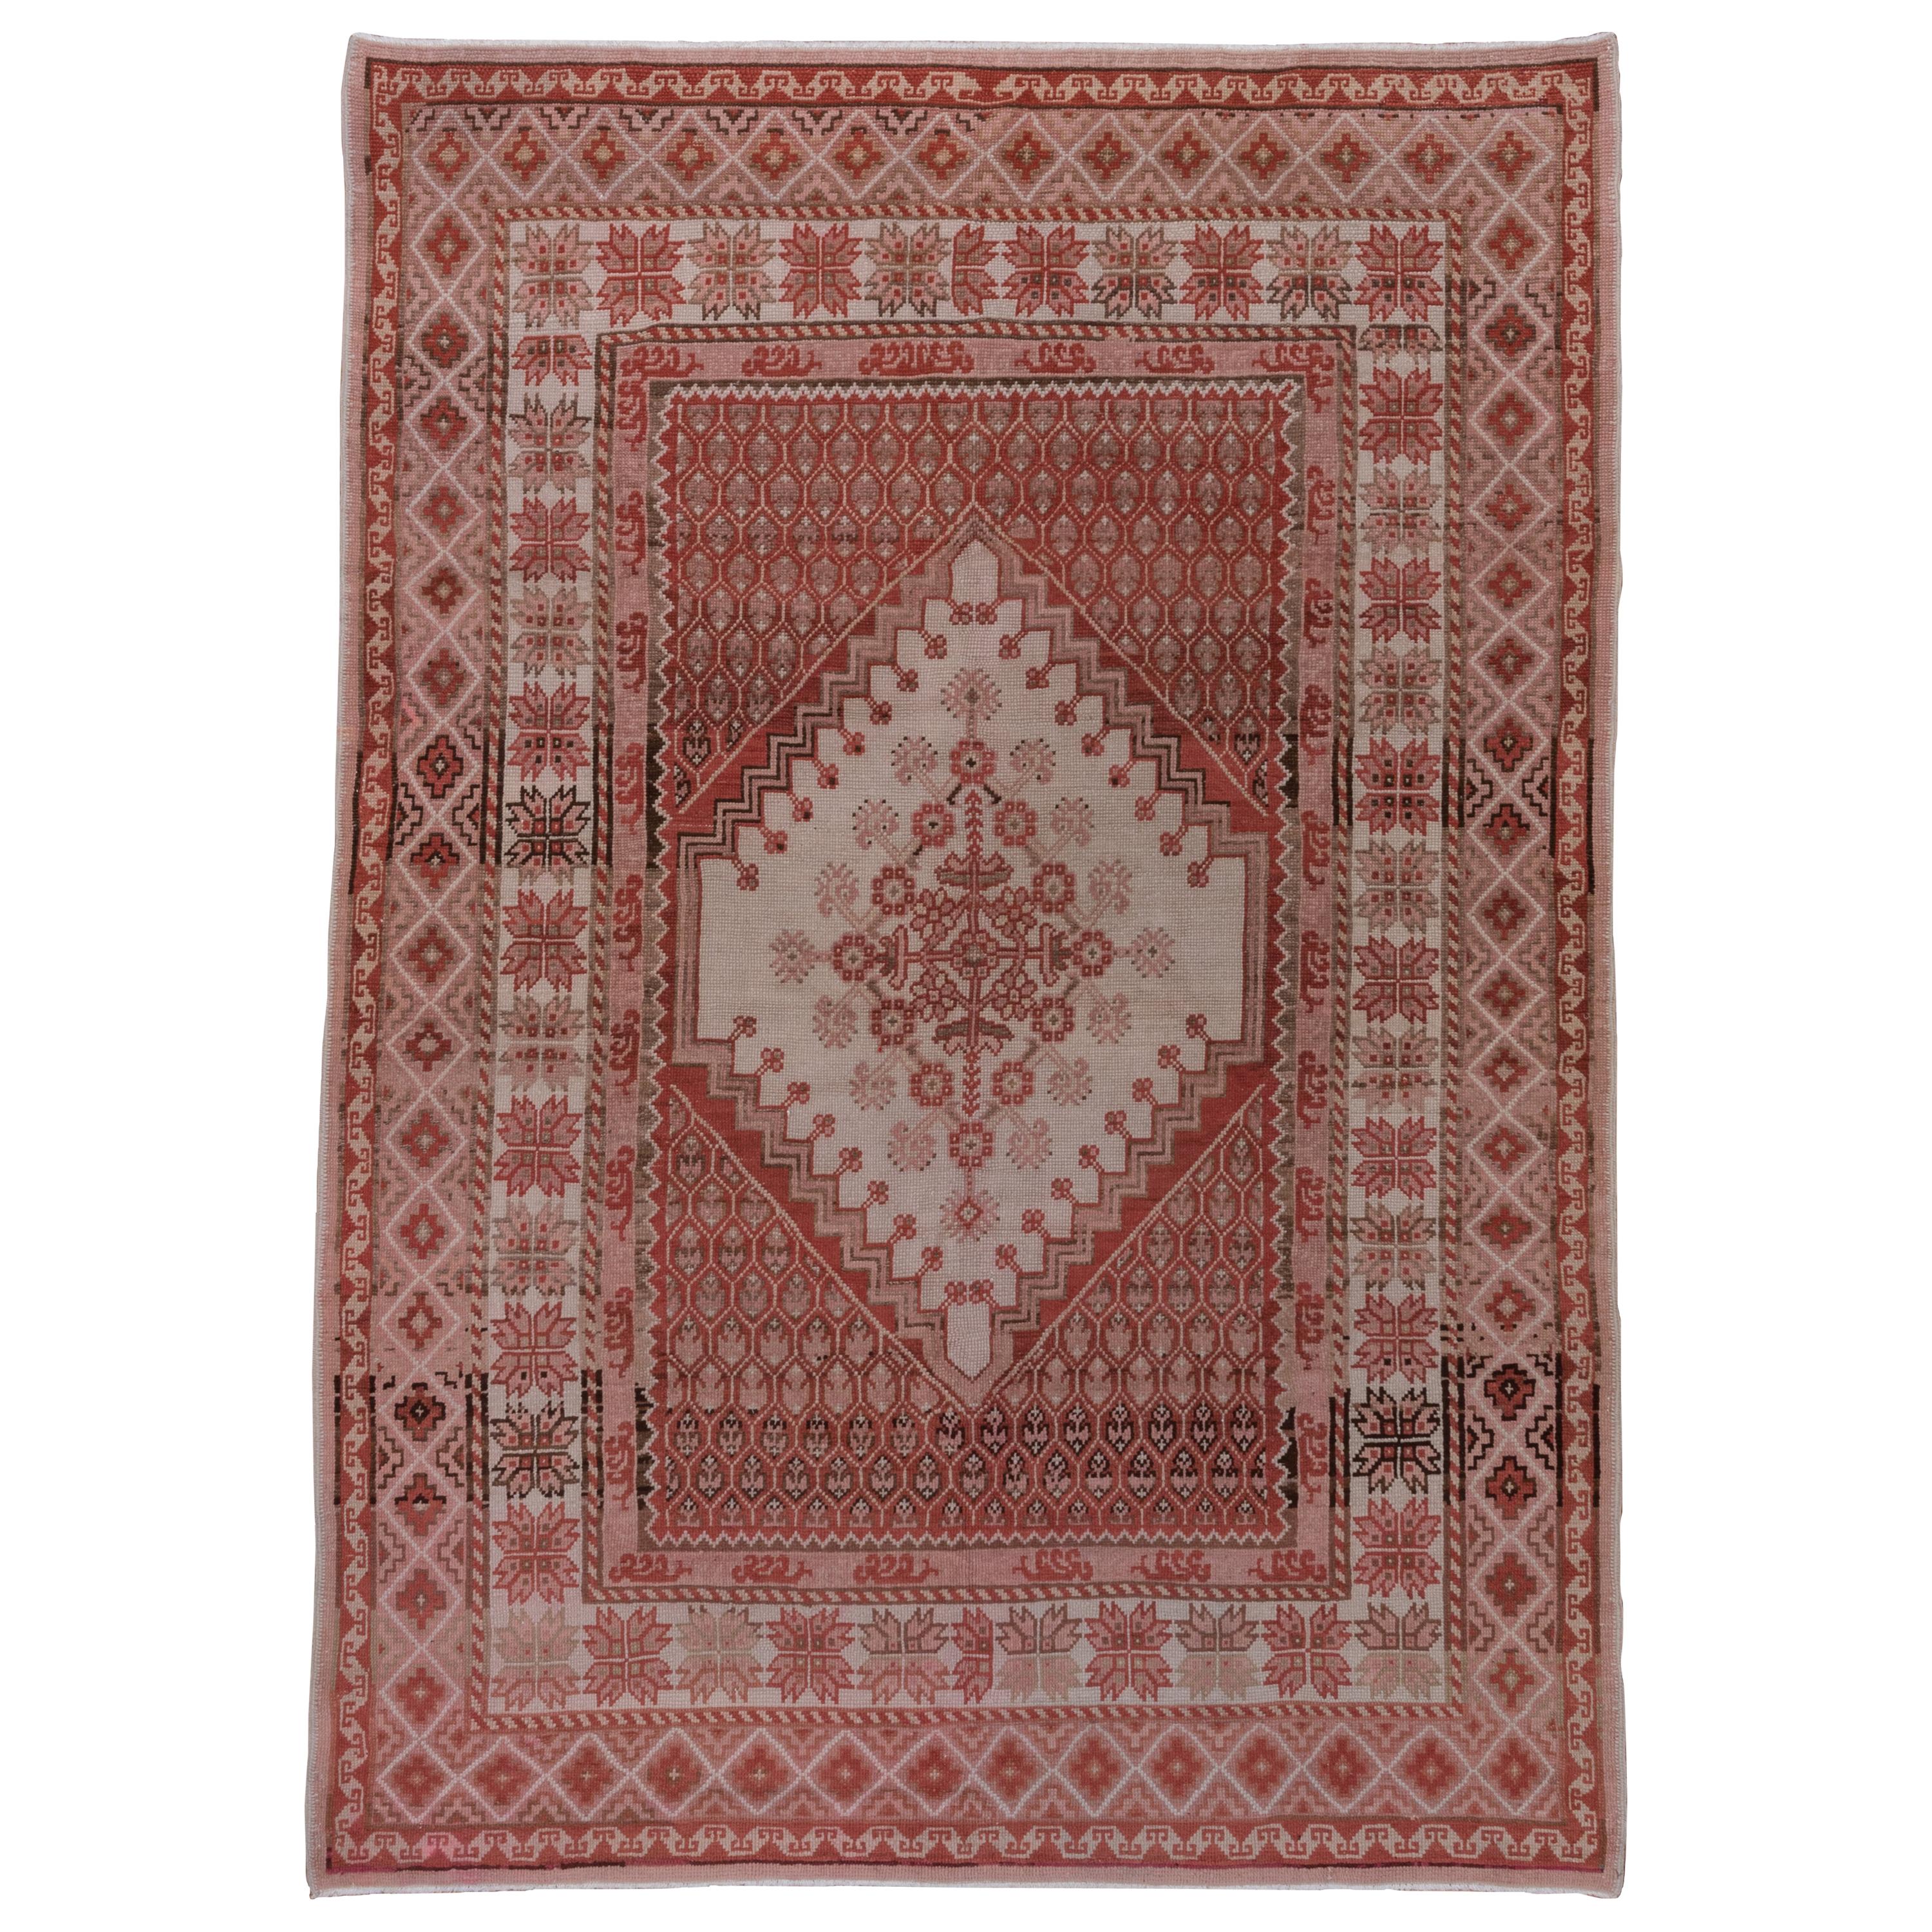 Antique Oushak Carpet, Pink, Red, Ivory, Brown, circa 1930s